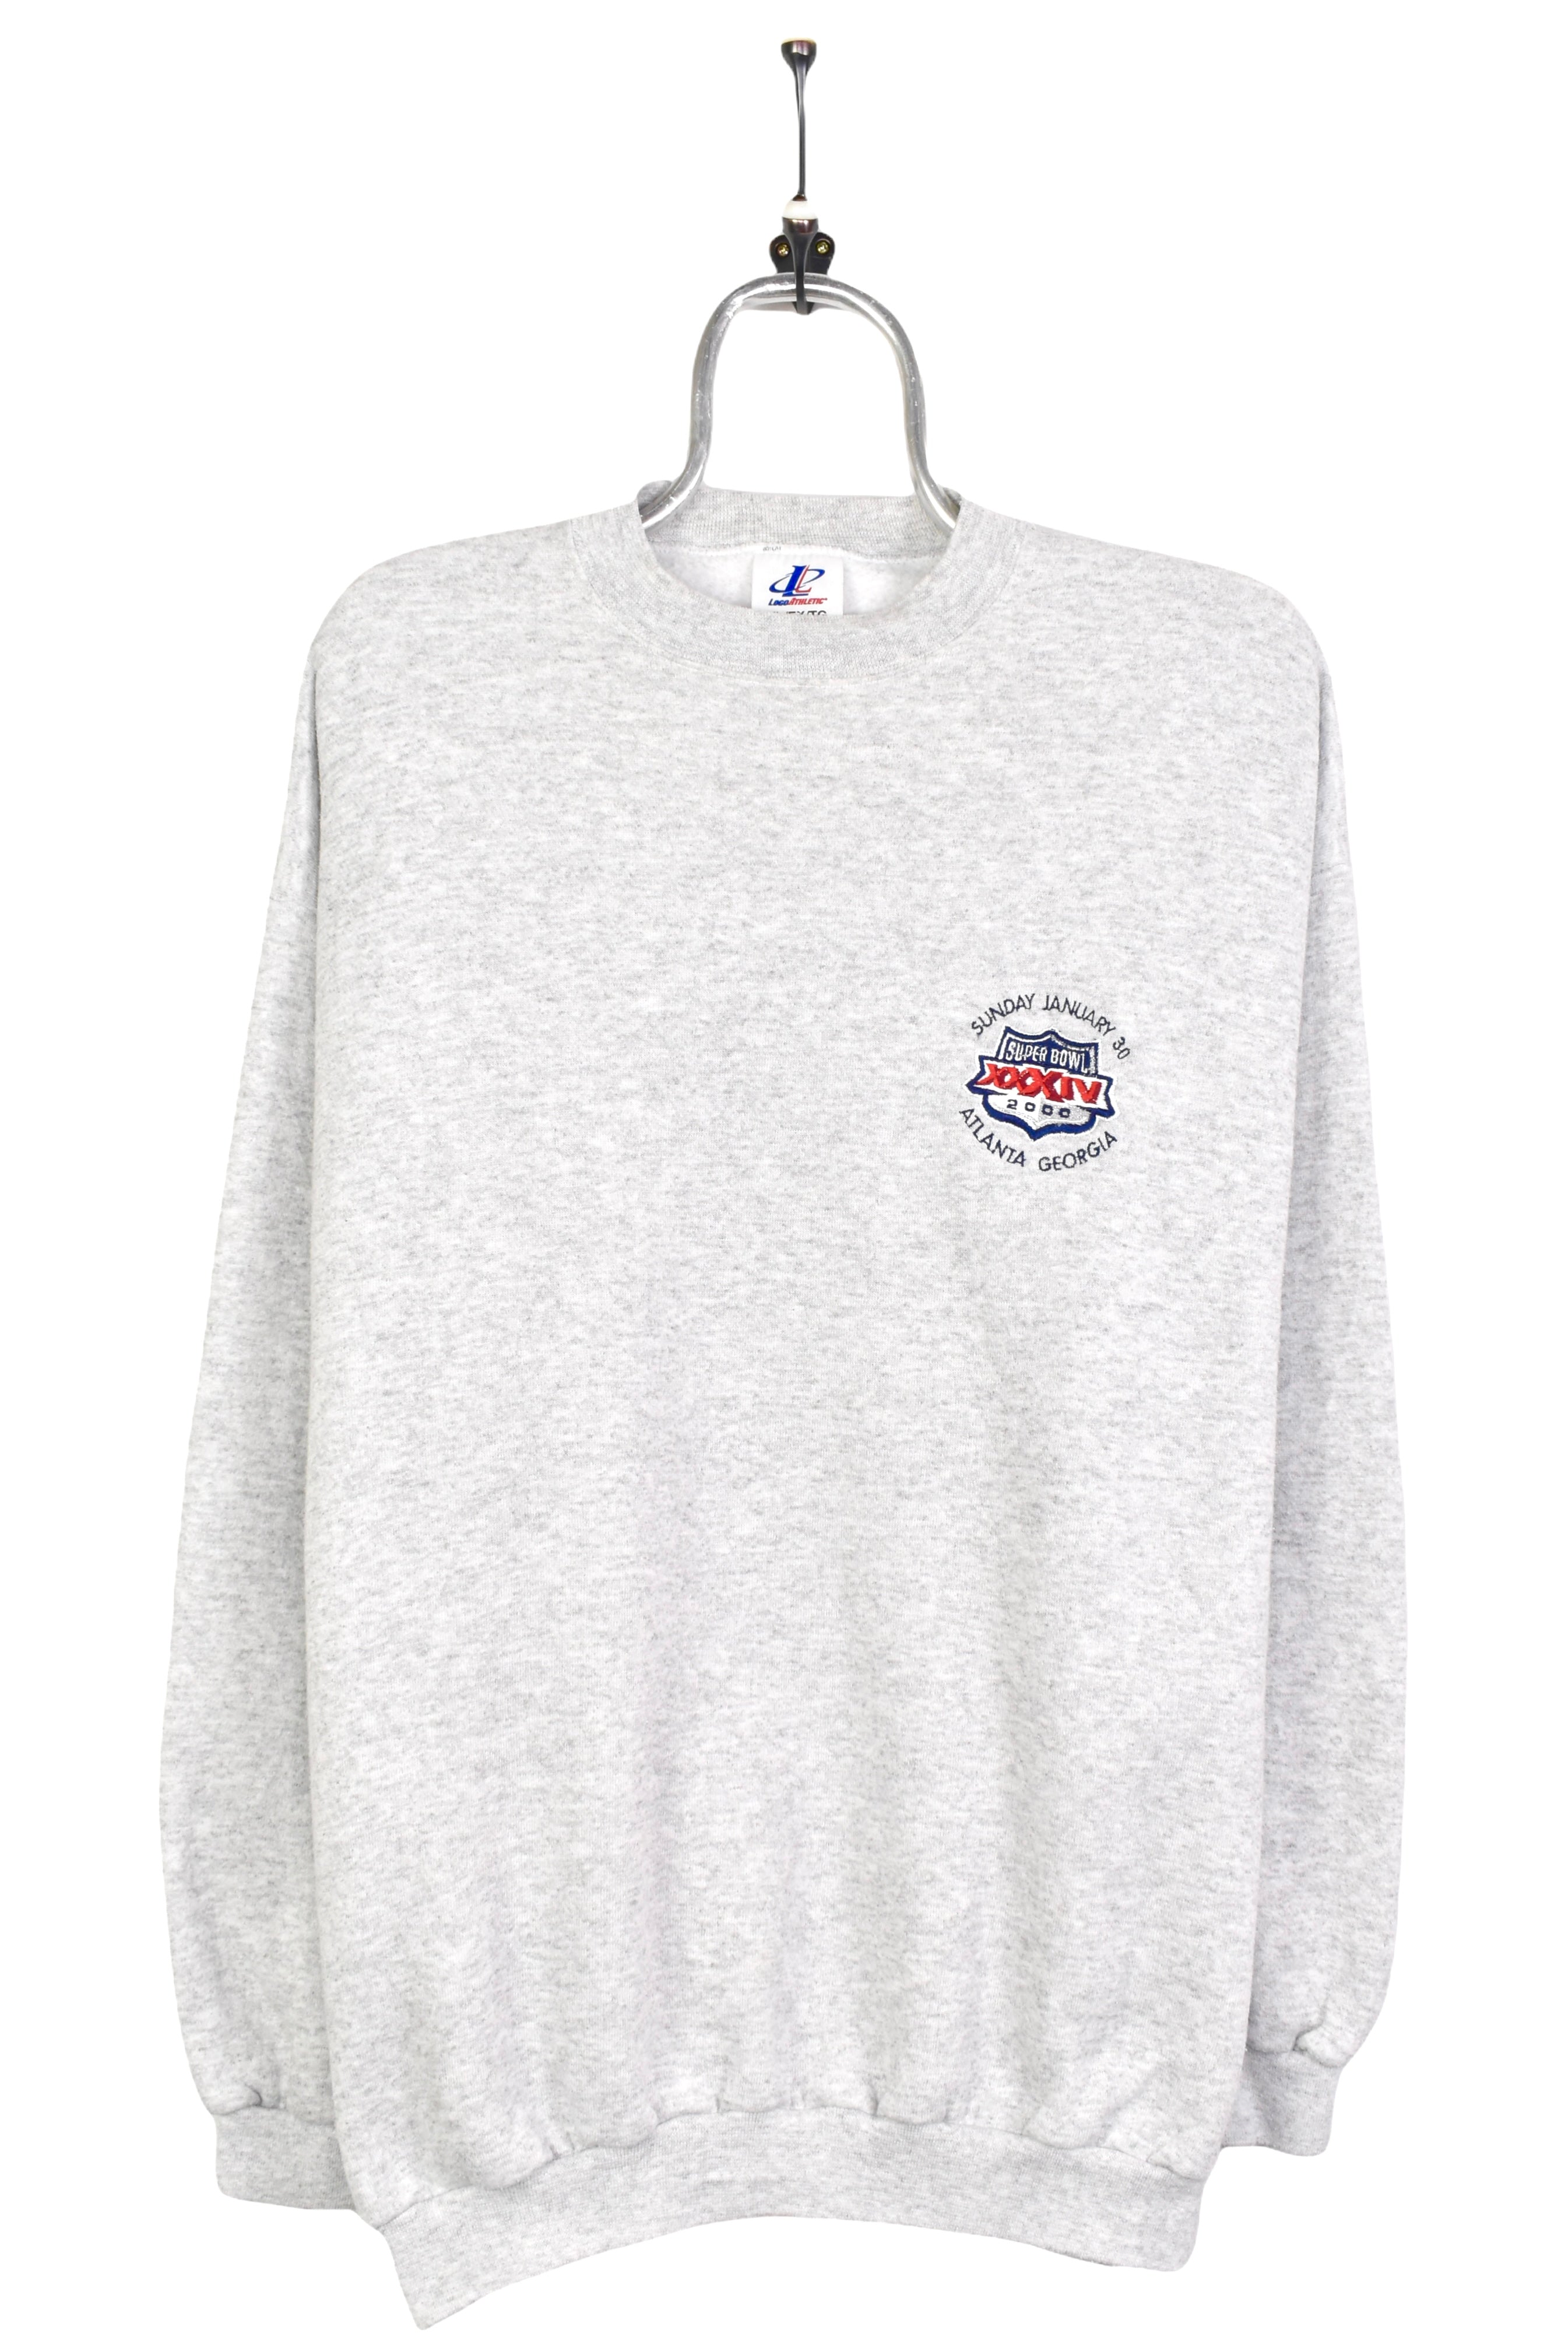 Vintage 2000 NFL Super Bowl embroidered grey sweatshirt | XL PRO SPORT